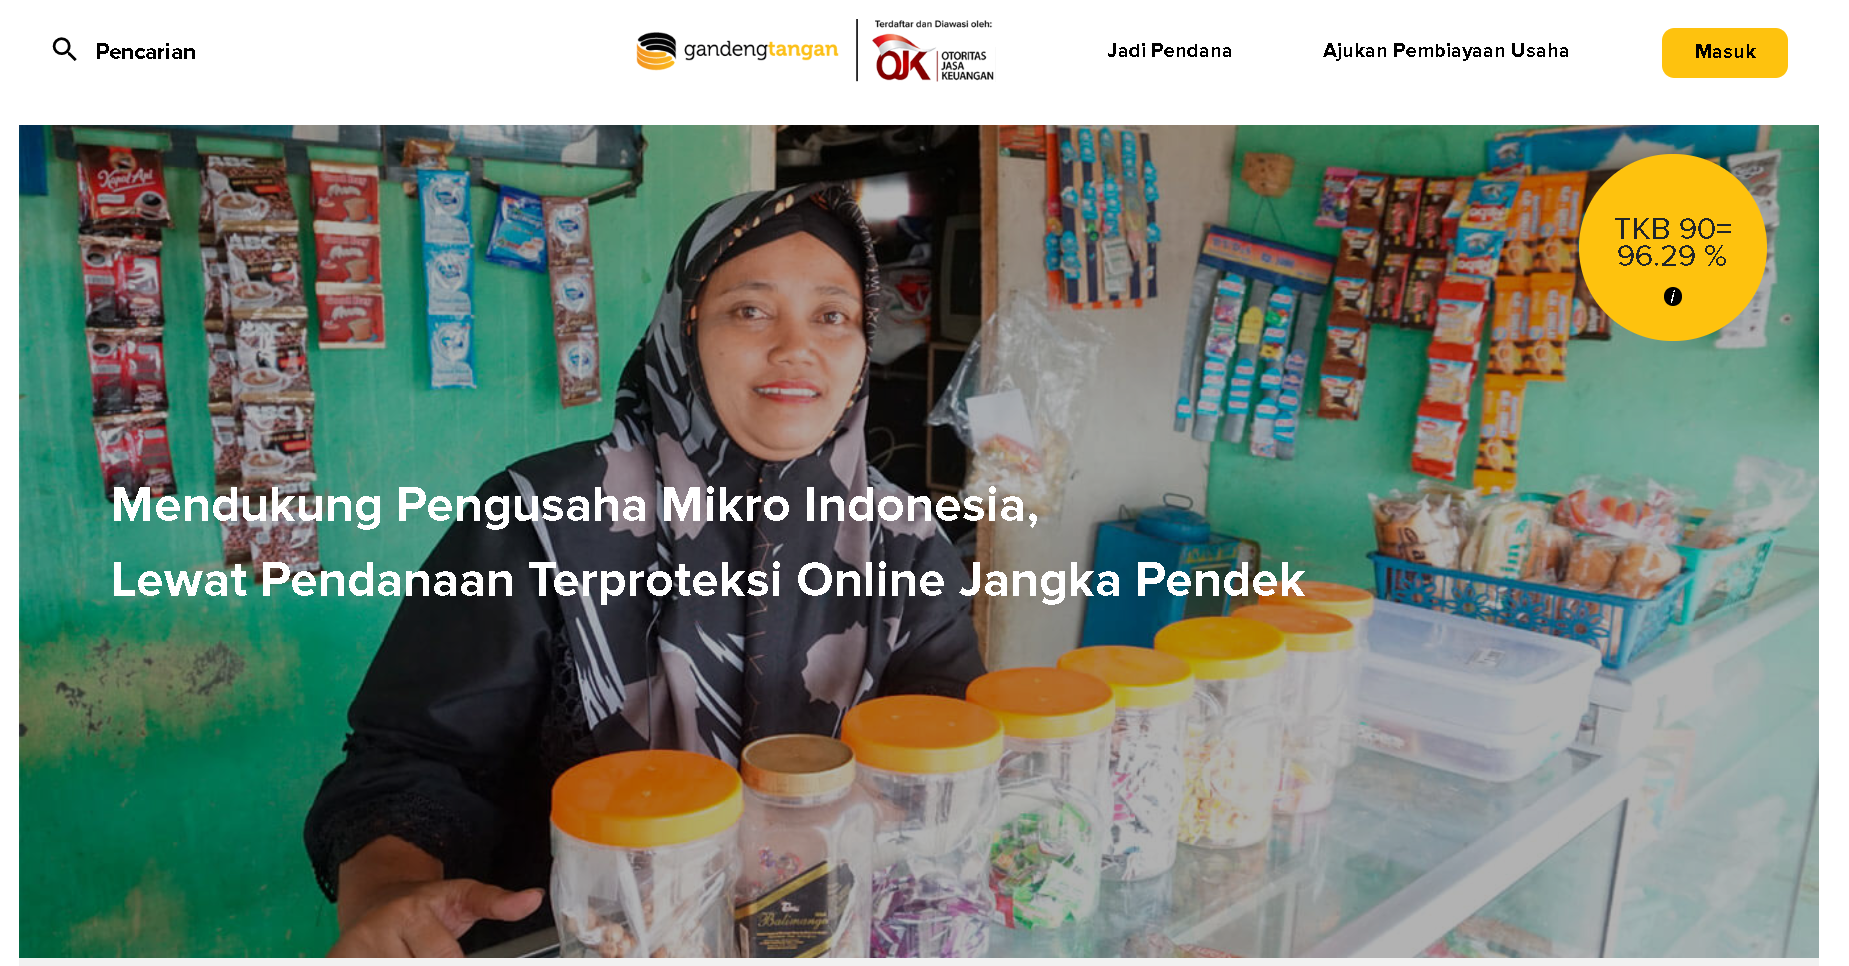 GandengTangan, an online lending platform that helps provide loans to “informal entrepreneurs” in Indonesia (Photo courtesy of https://gandengtangan.co.id/)